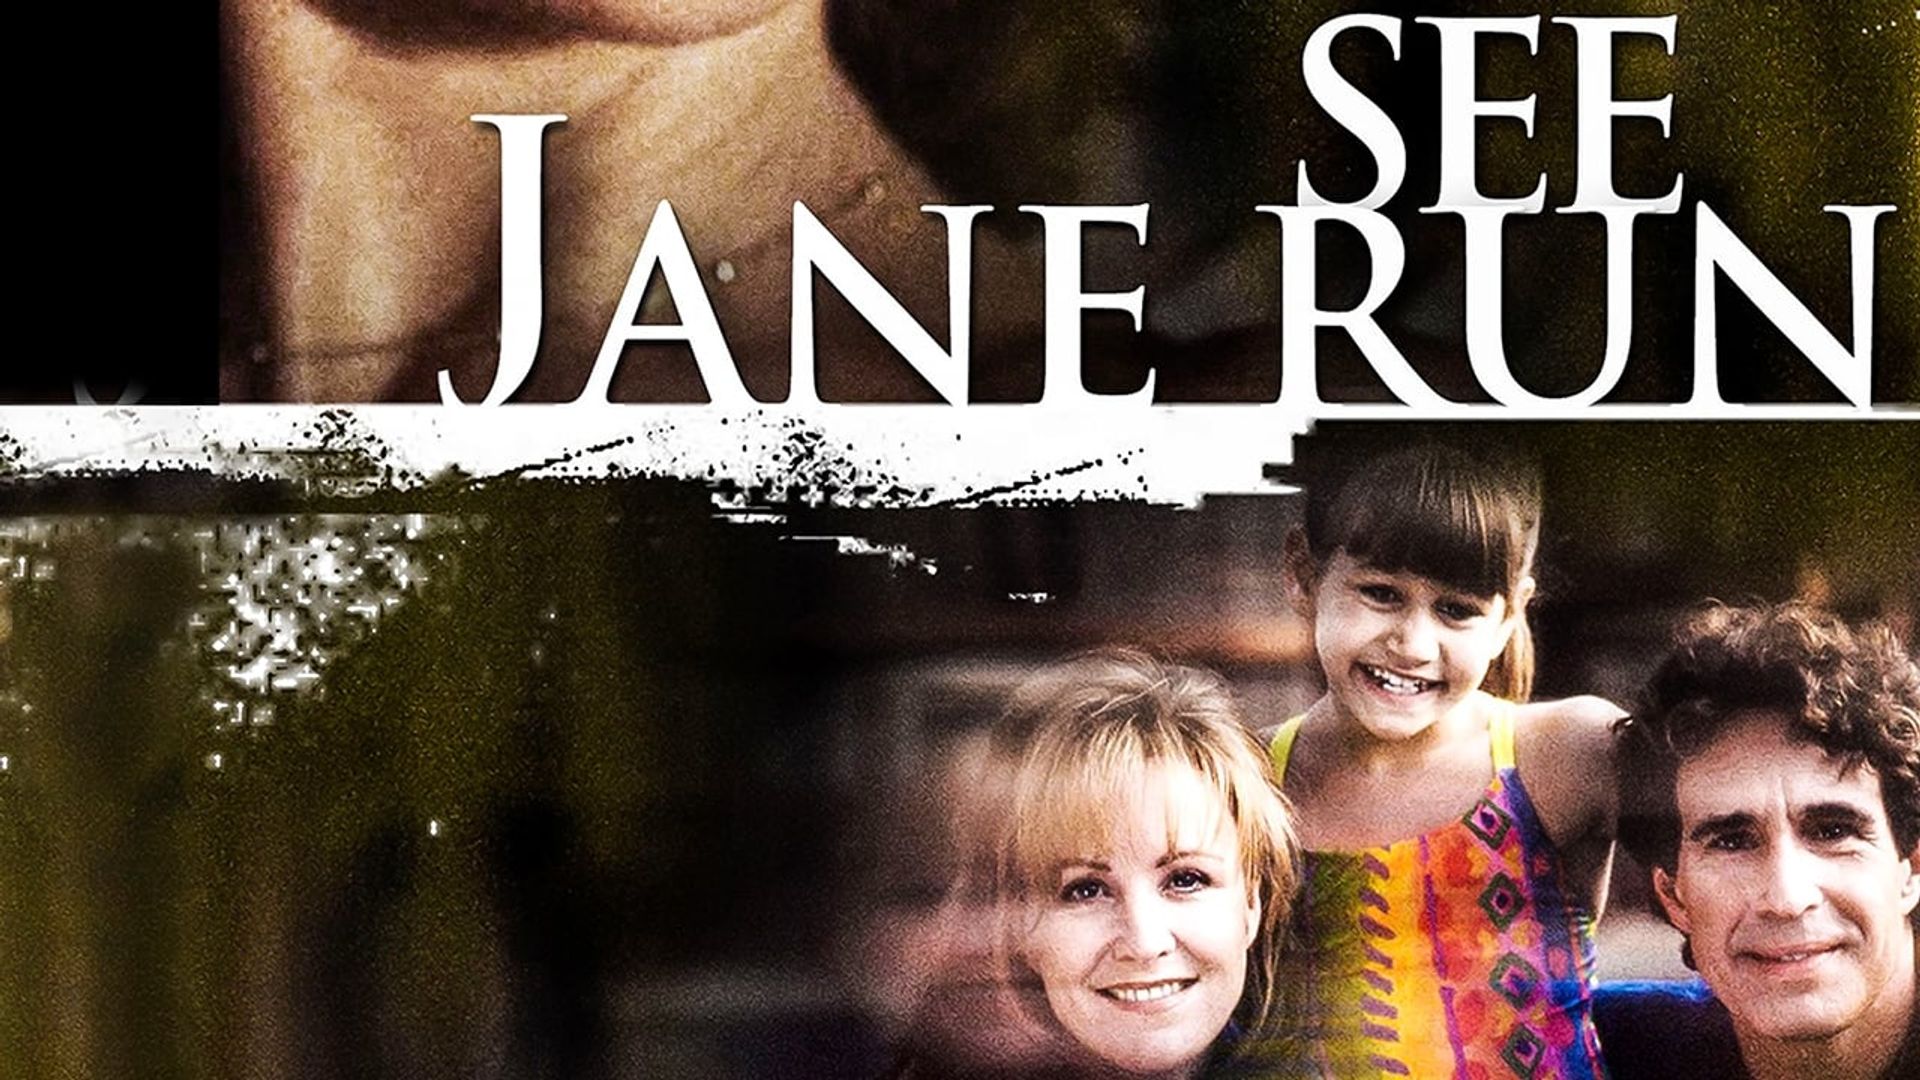 See Jane Run background